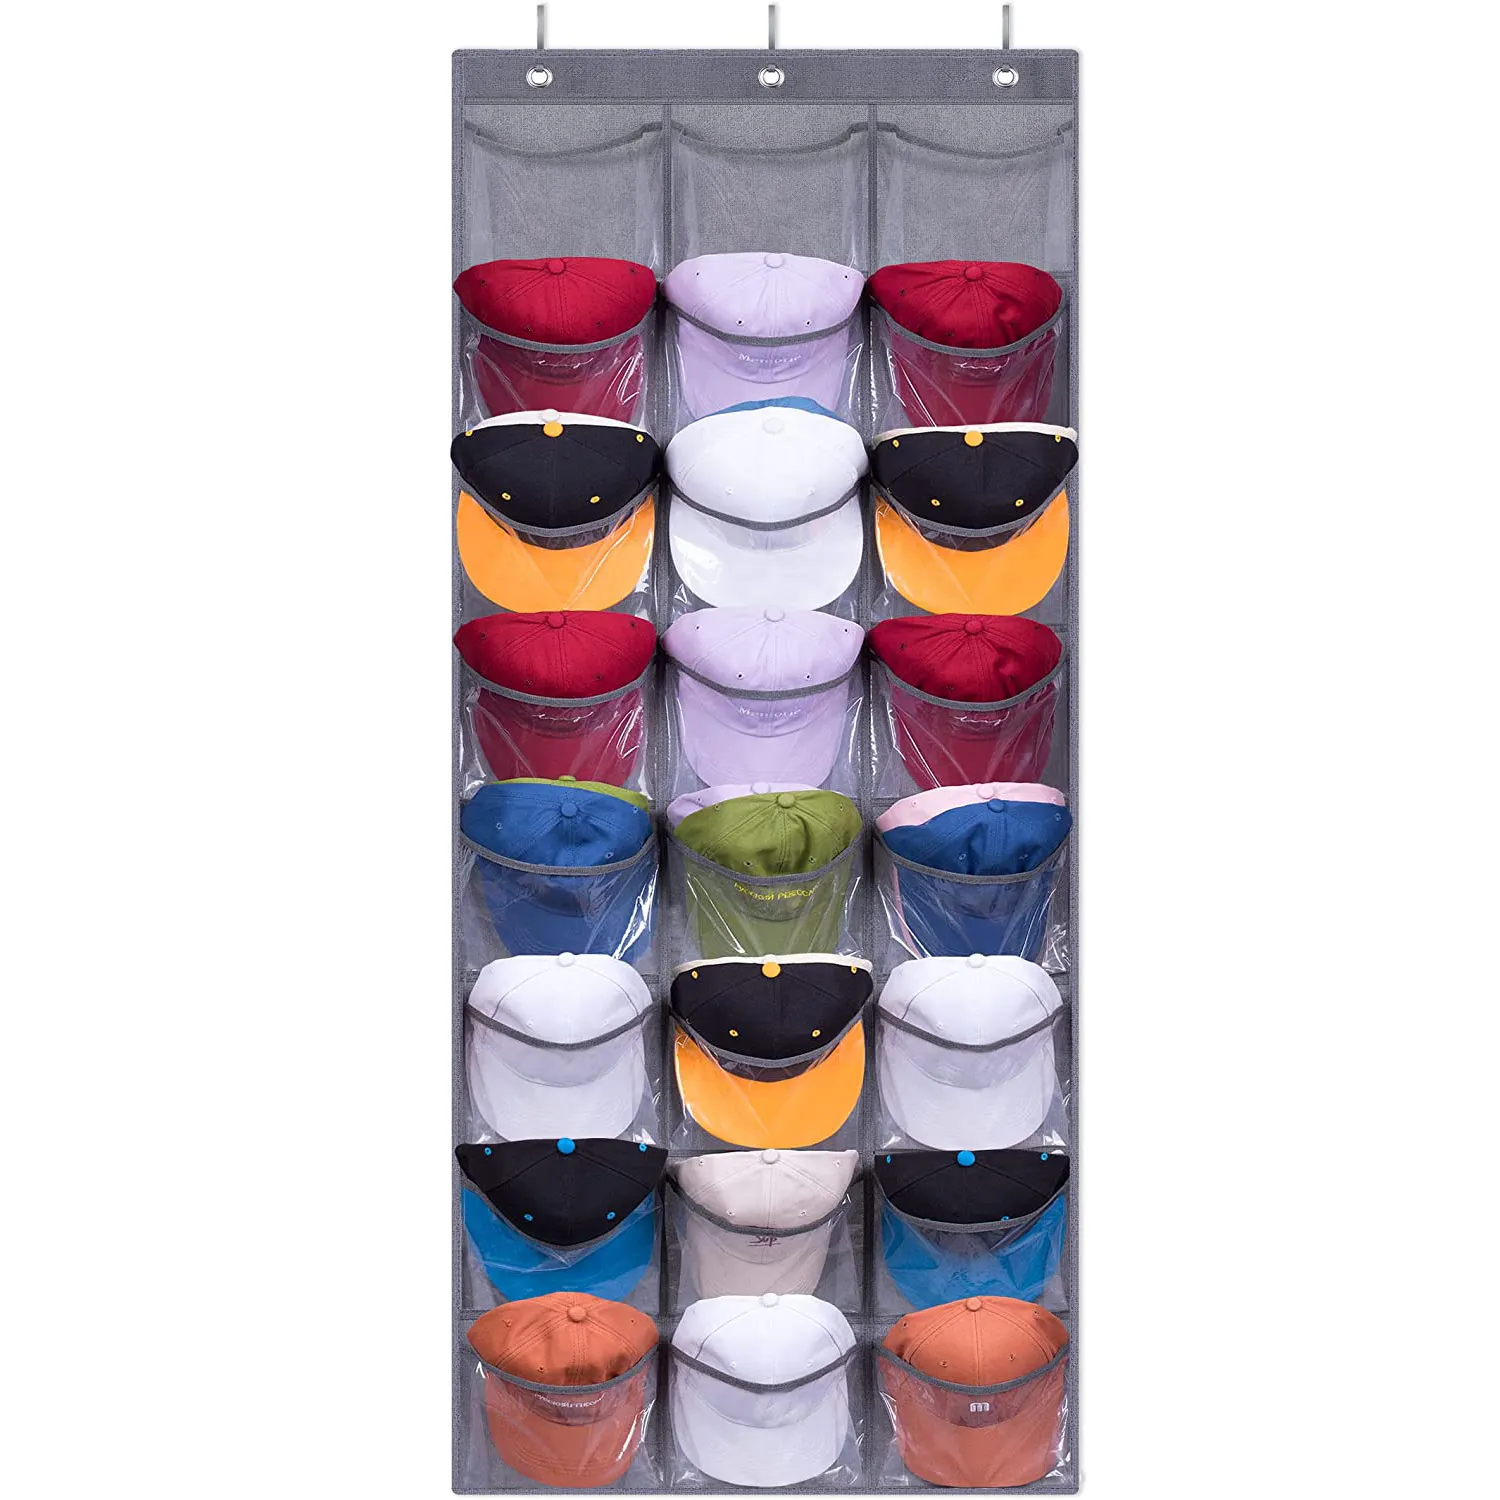 2 pack Hanging hat Organizer for Closet 12 Extra Large Mesh Pockets Over The Door hat Rack for Men Black